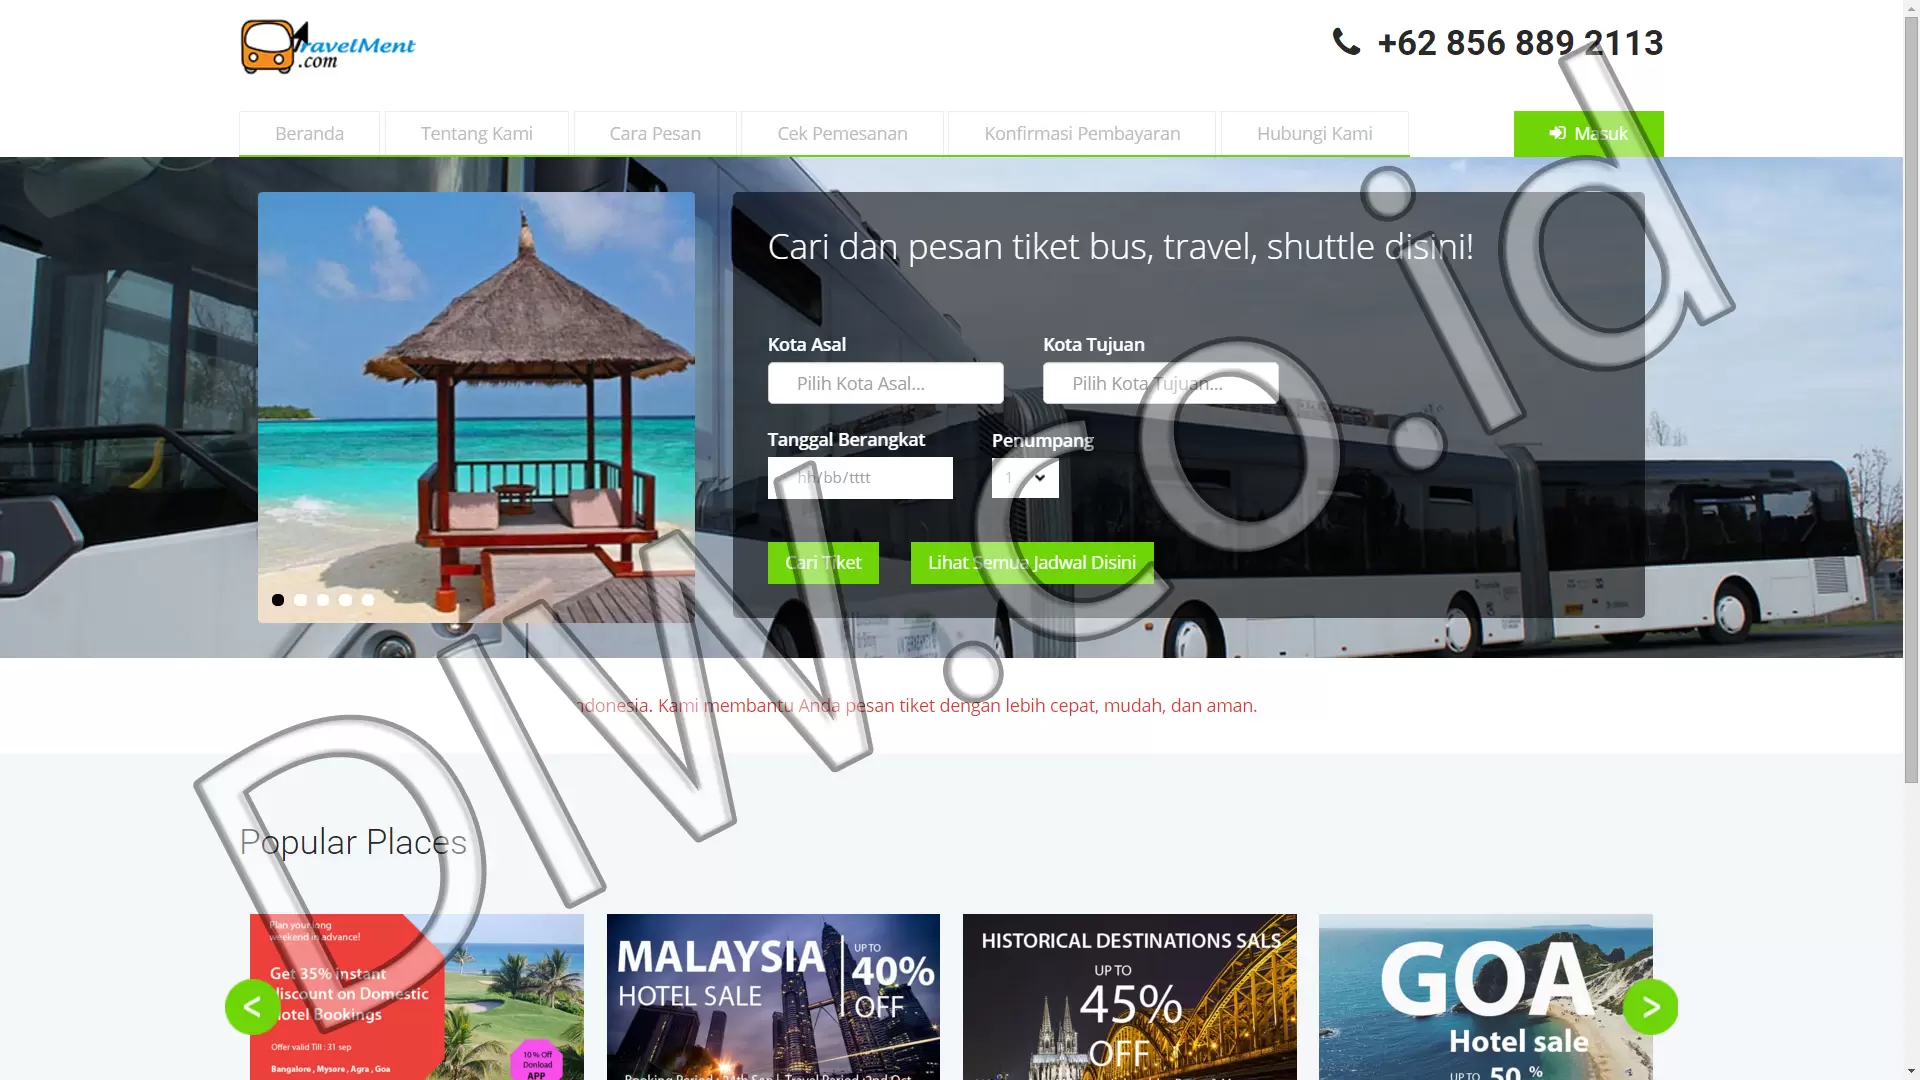 Portfolio - Travelment - DIW.co.id (Digital In Website) Jasa Pembuatan Website dan Program Skripsi